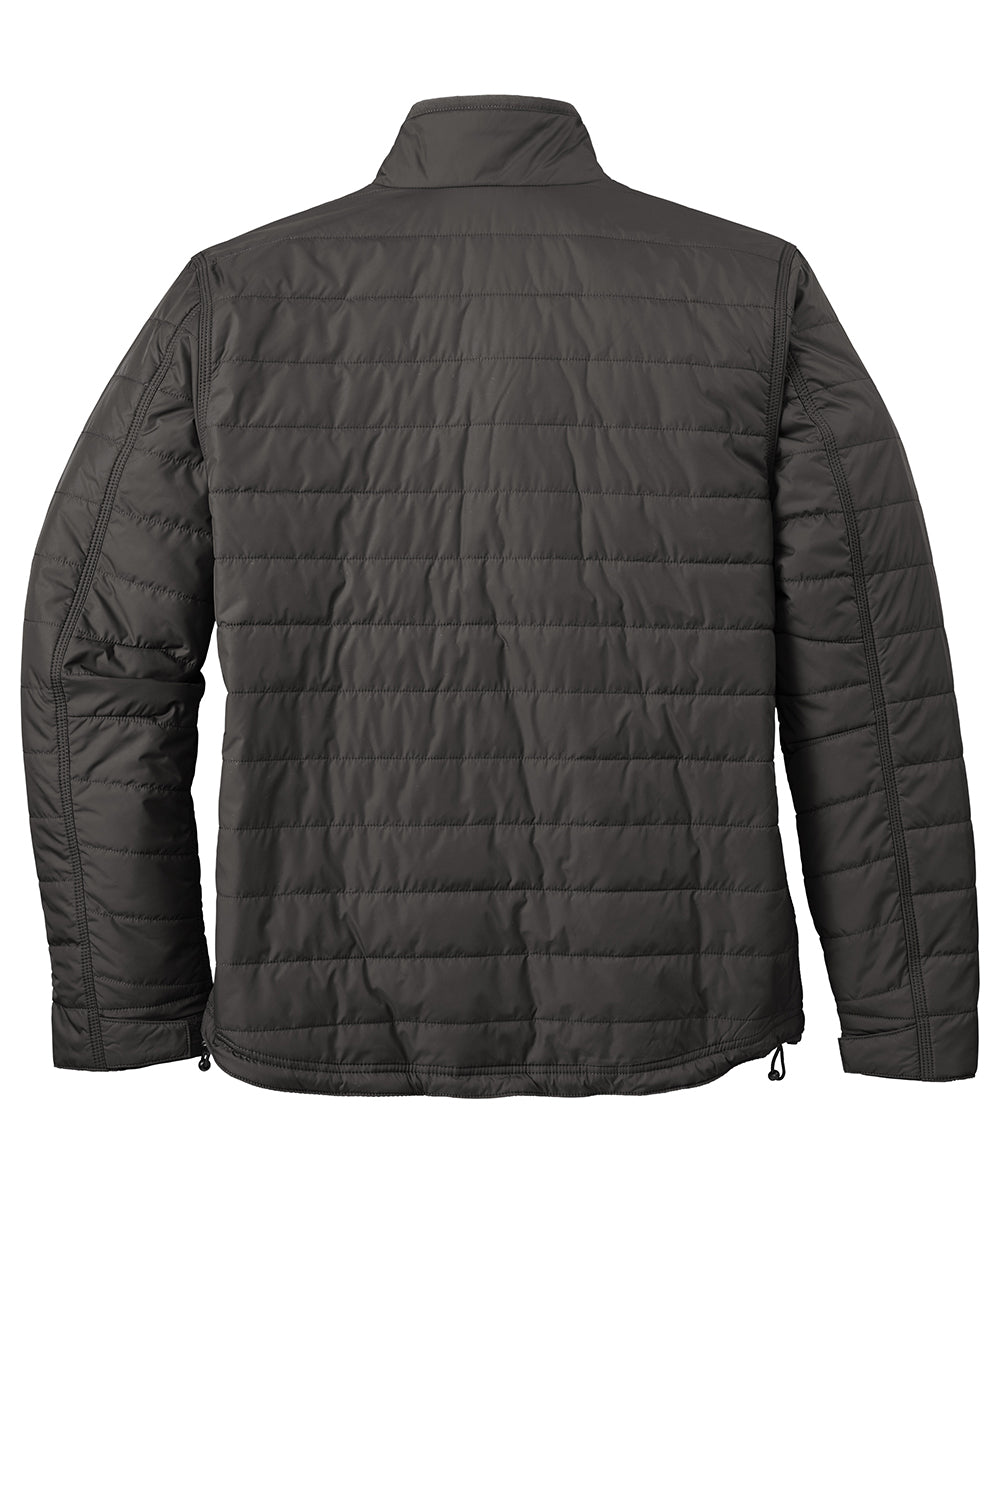 Carhartt CT102208 Mens Gilliam Wind & Water Resistant Full Zip Jacket Shadow Grey Flat Back